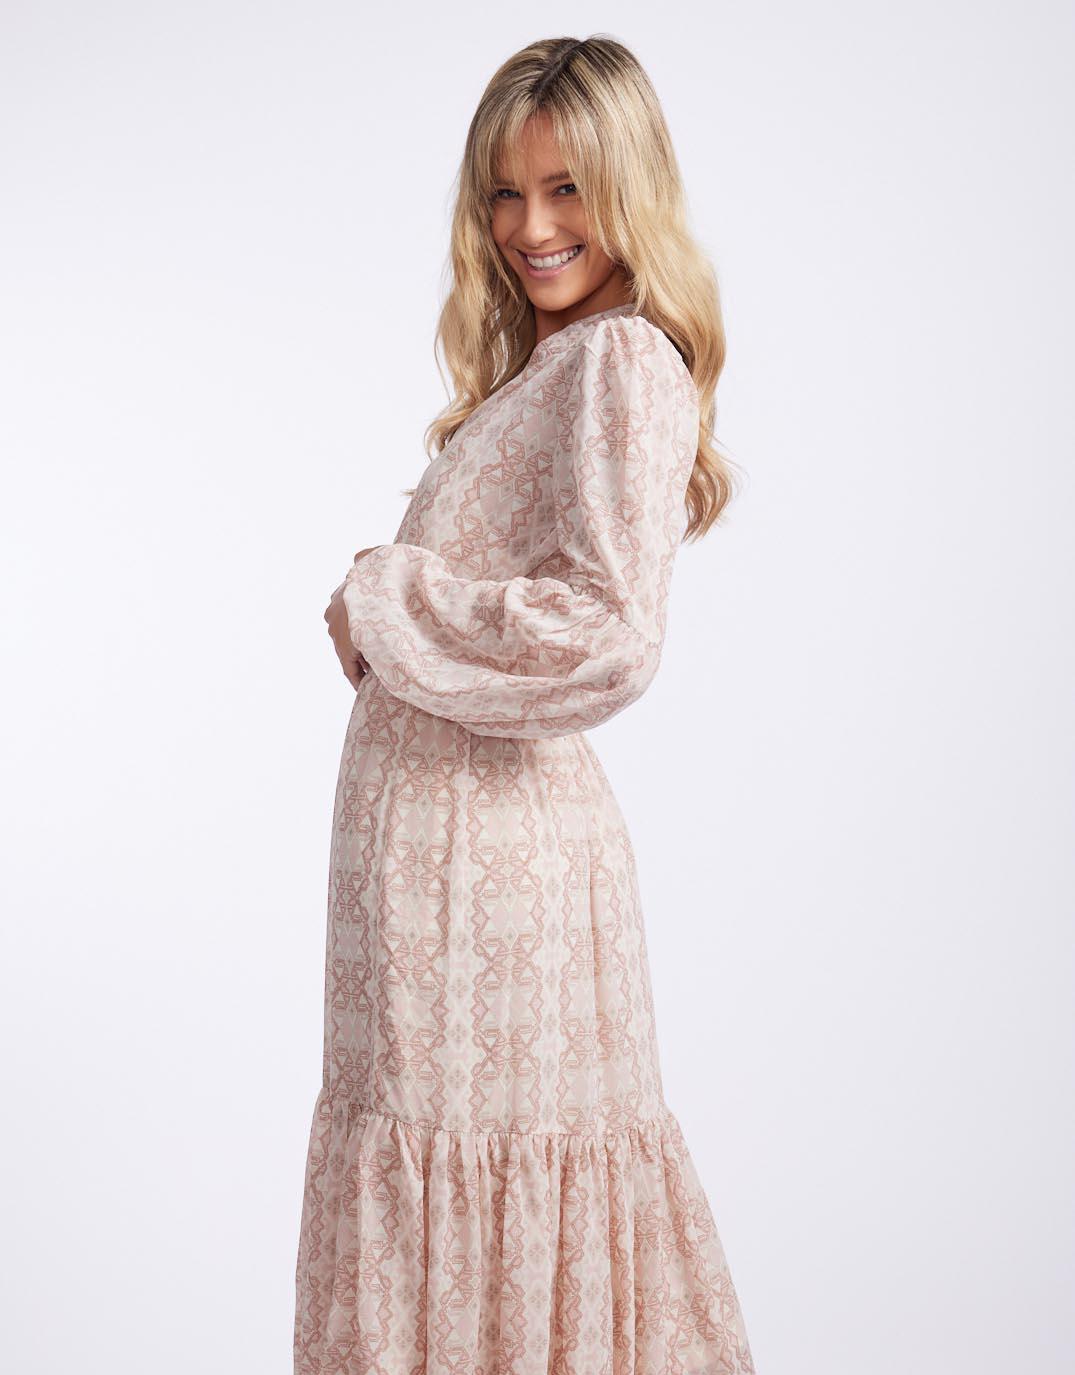 White & Co. - Midsummer Maxi Dress - Pink Aztec - White & Co Living Dresses